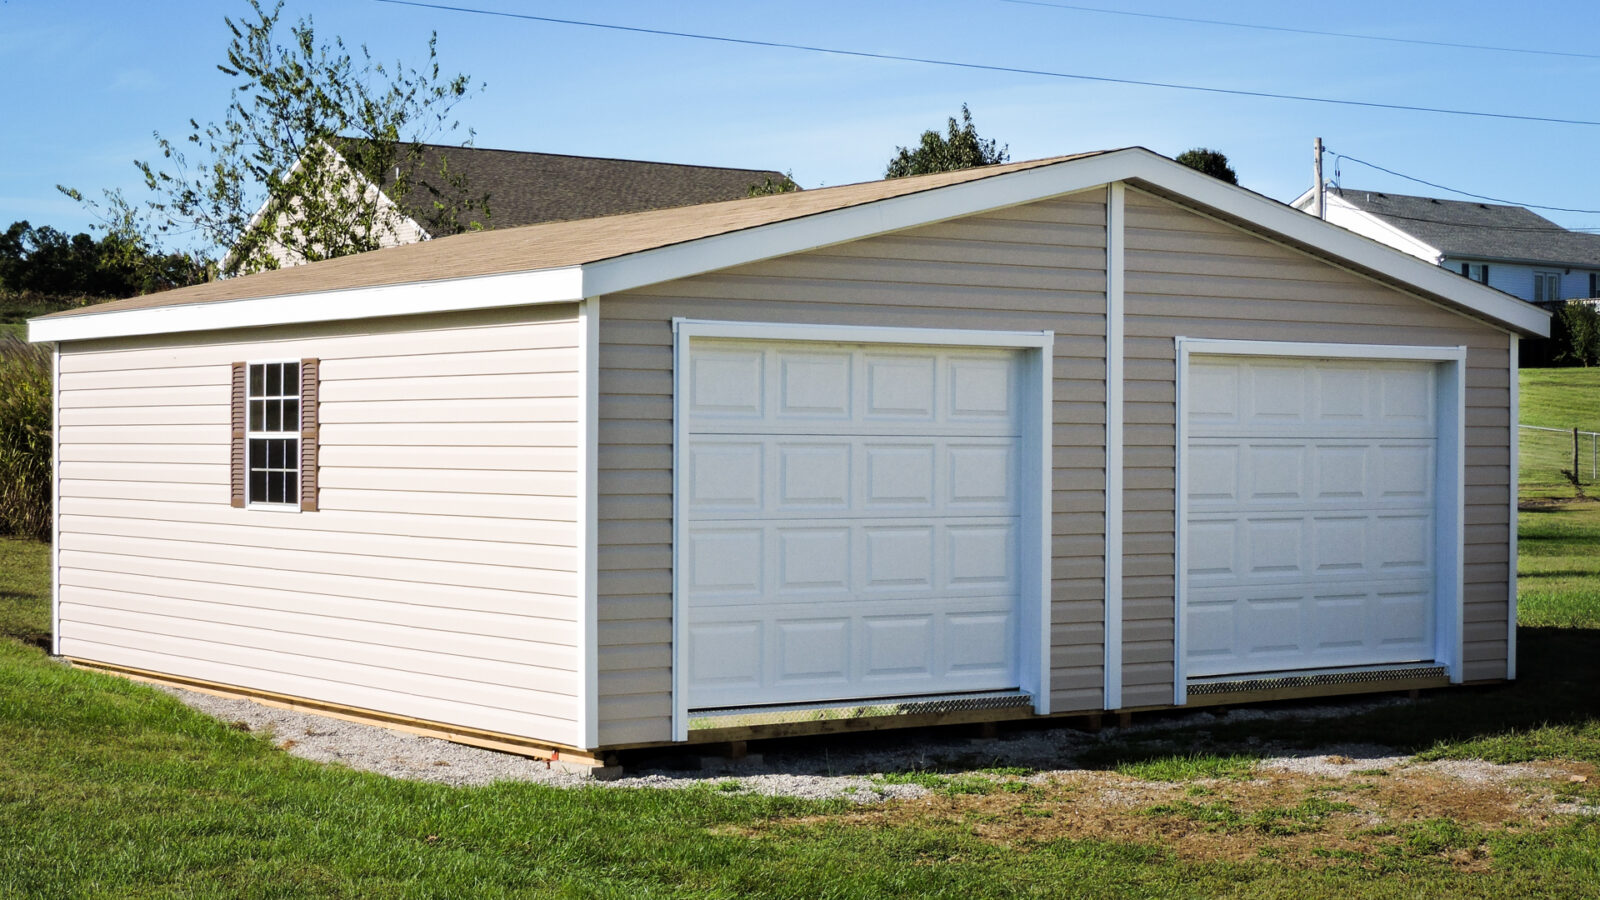 exterior of garage storage shed for sale